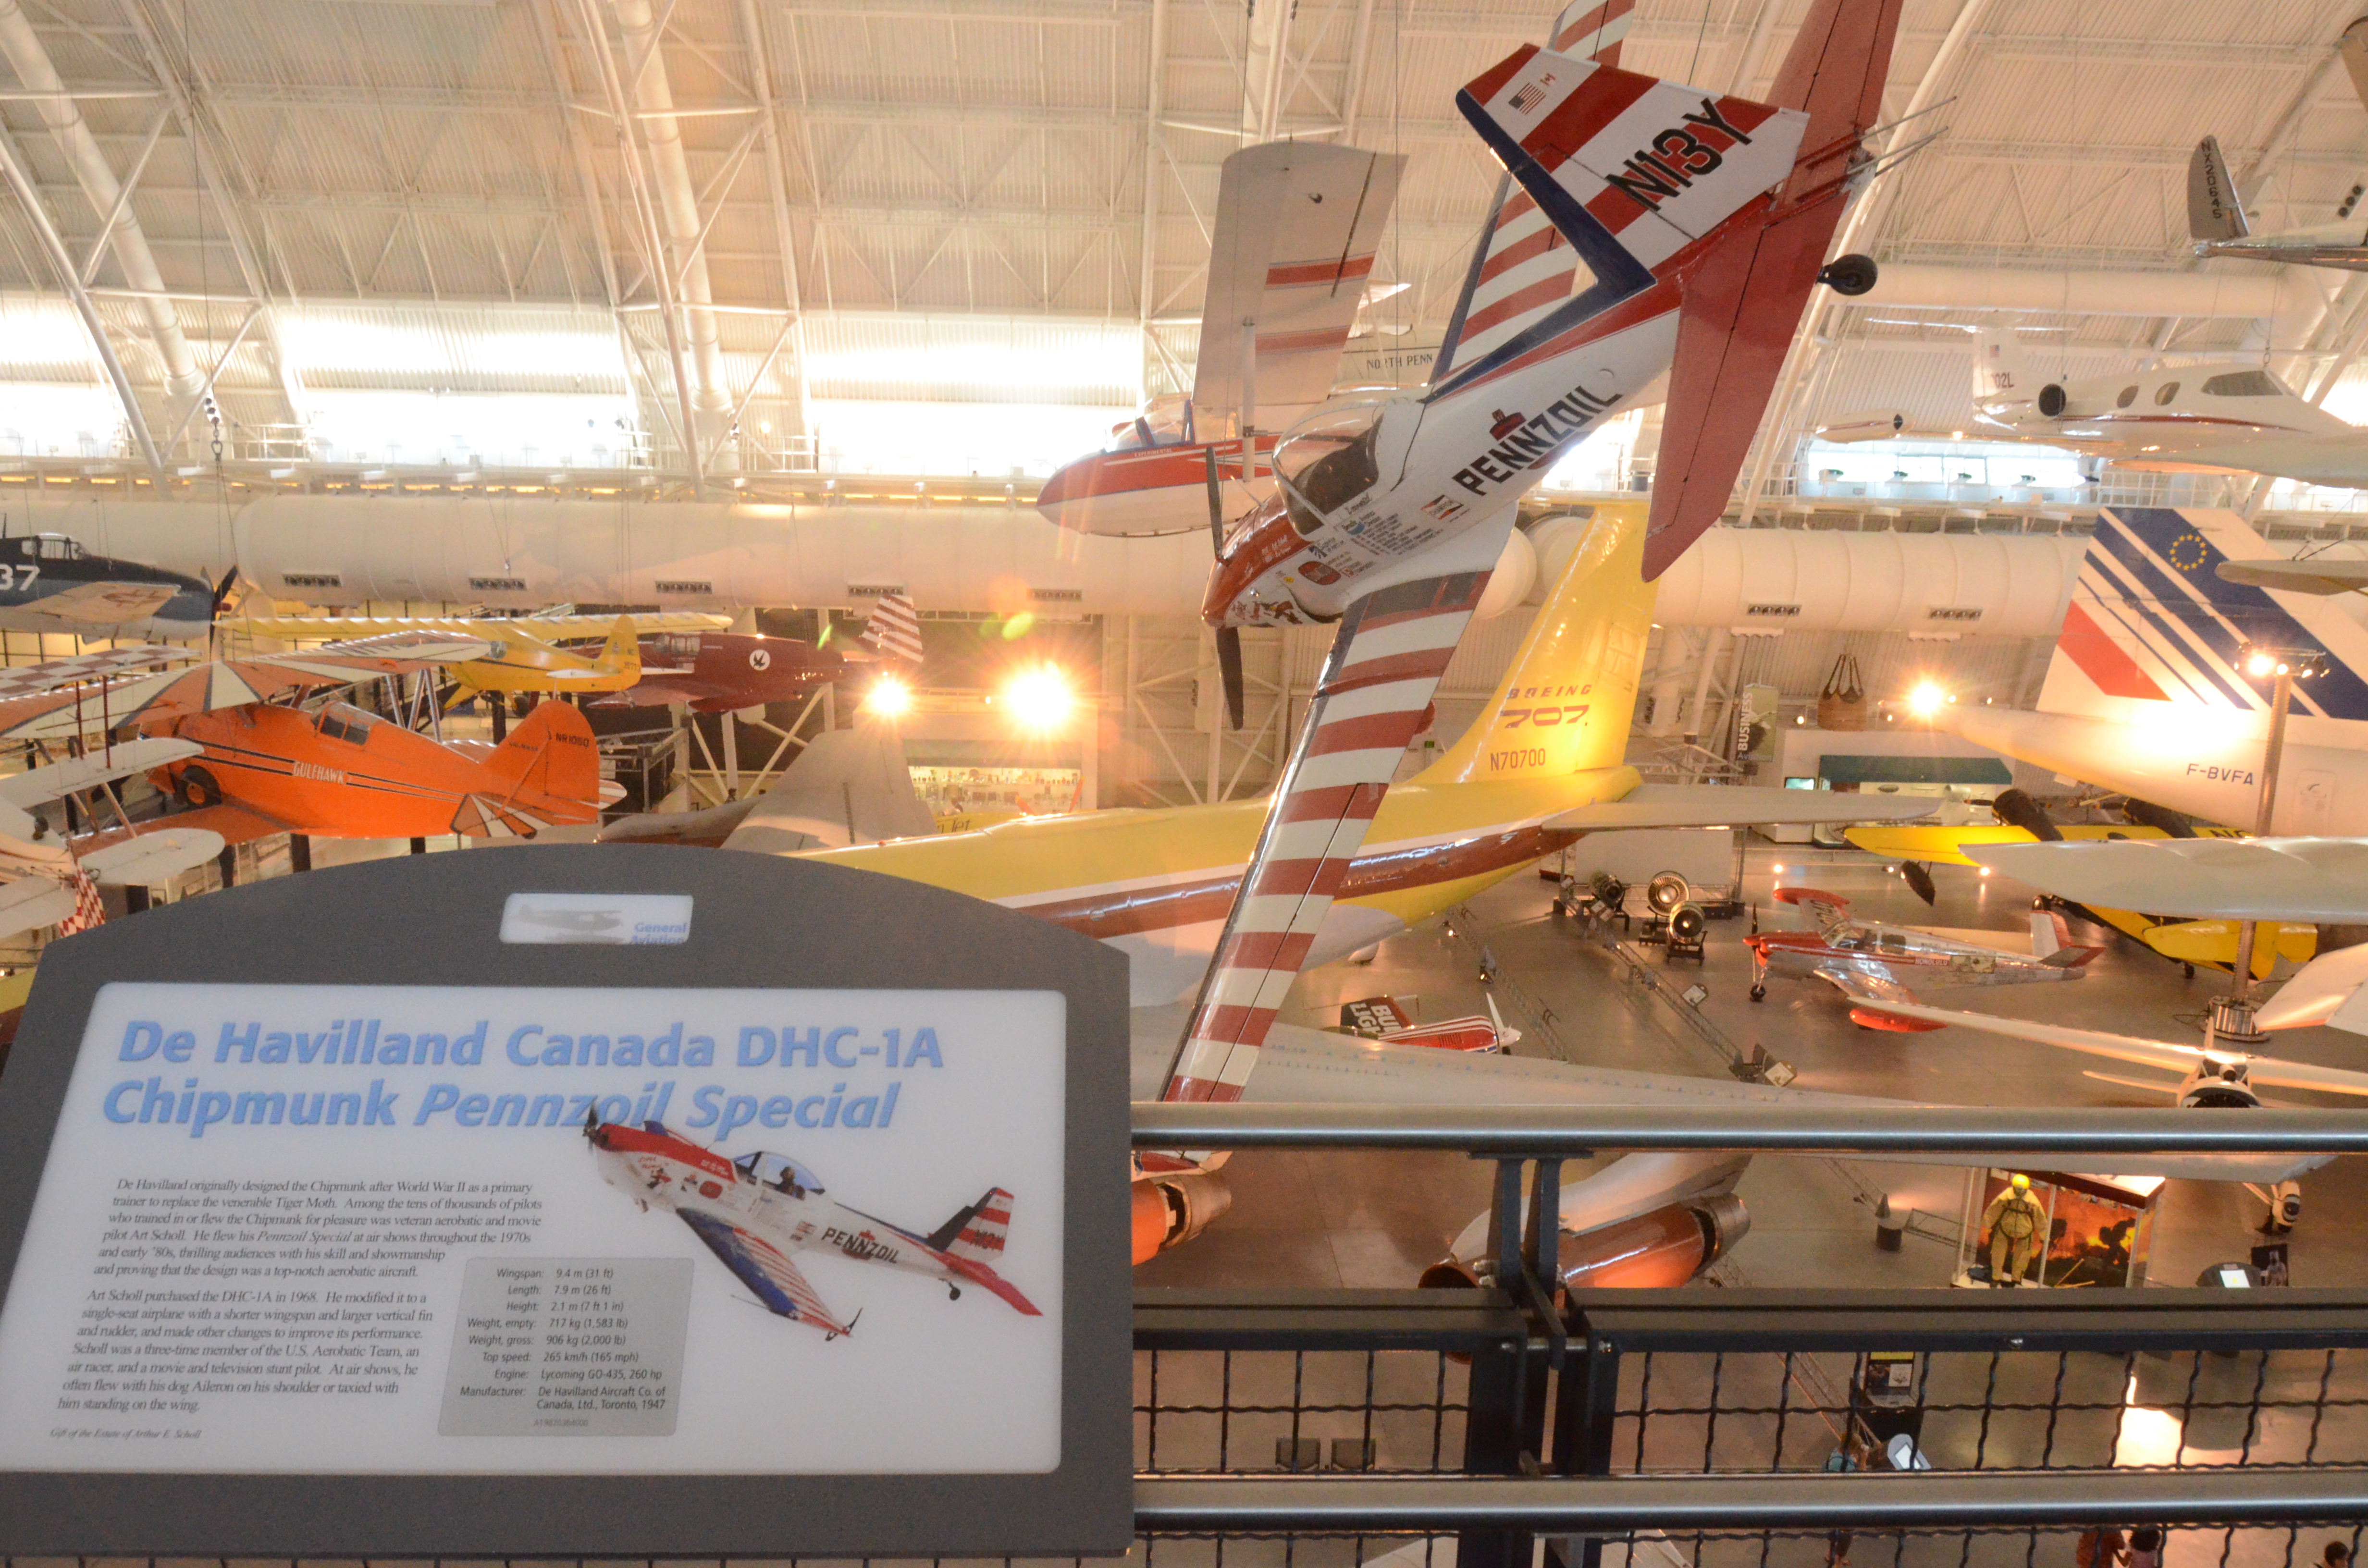 Steven F. Udvar-Hazy Center: De Havilland Canada DHC-1A Chipmunk Pennzoil Special